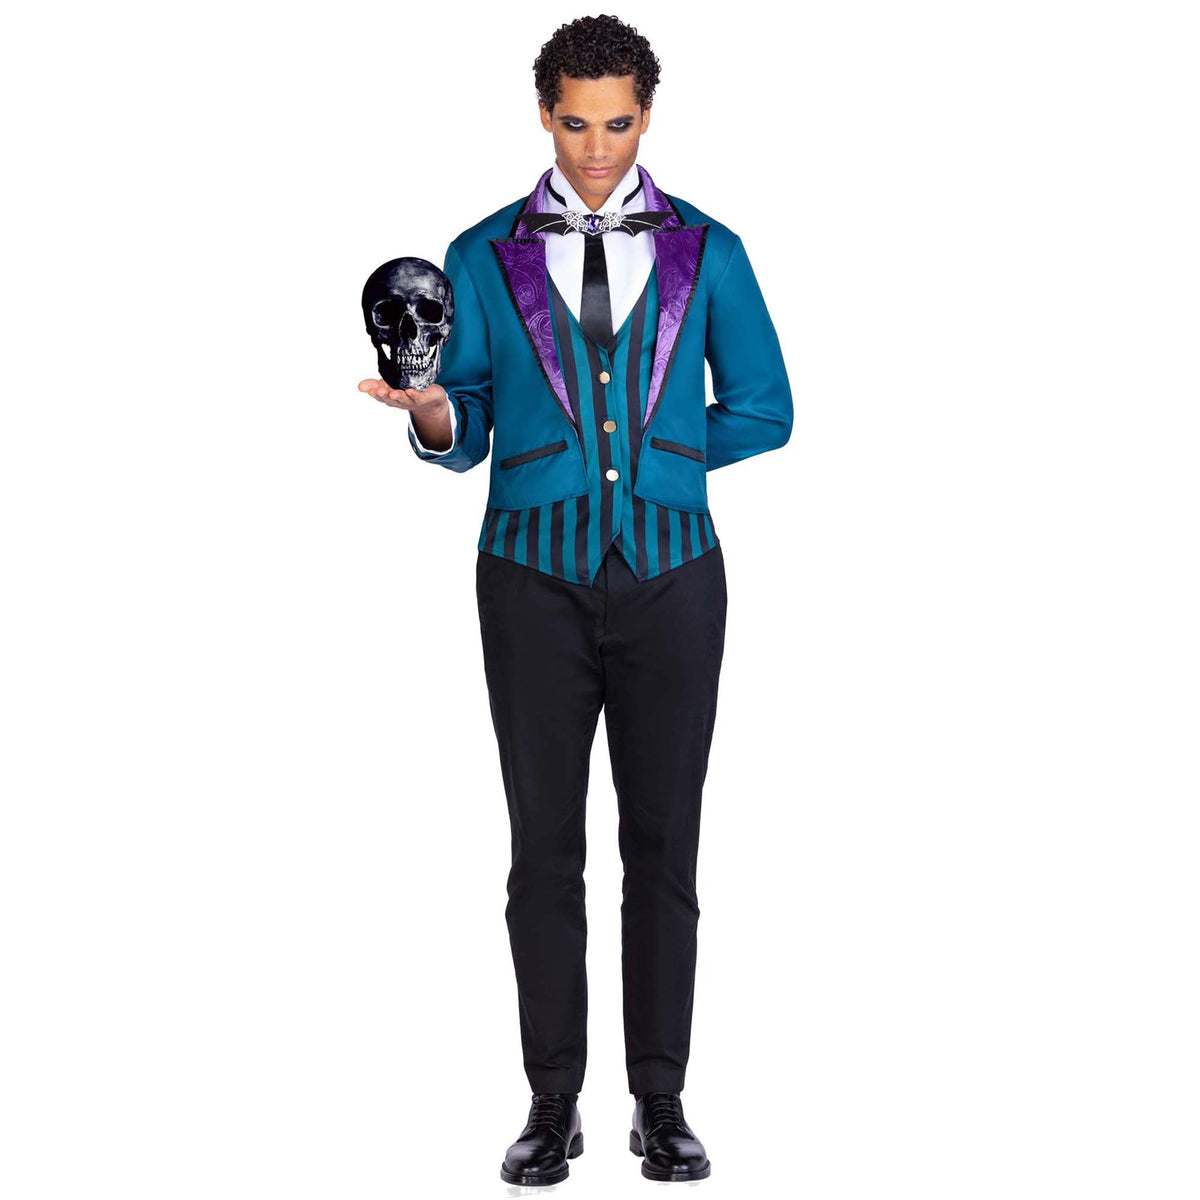 LEG AVENUE/SKU DISTRIBUTORS INC Costumes Copy of Haunted Butler Costume for Adults